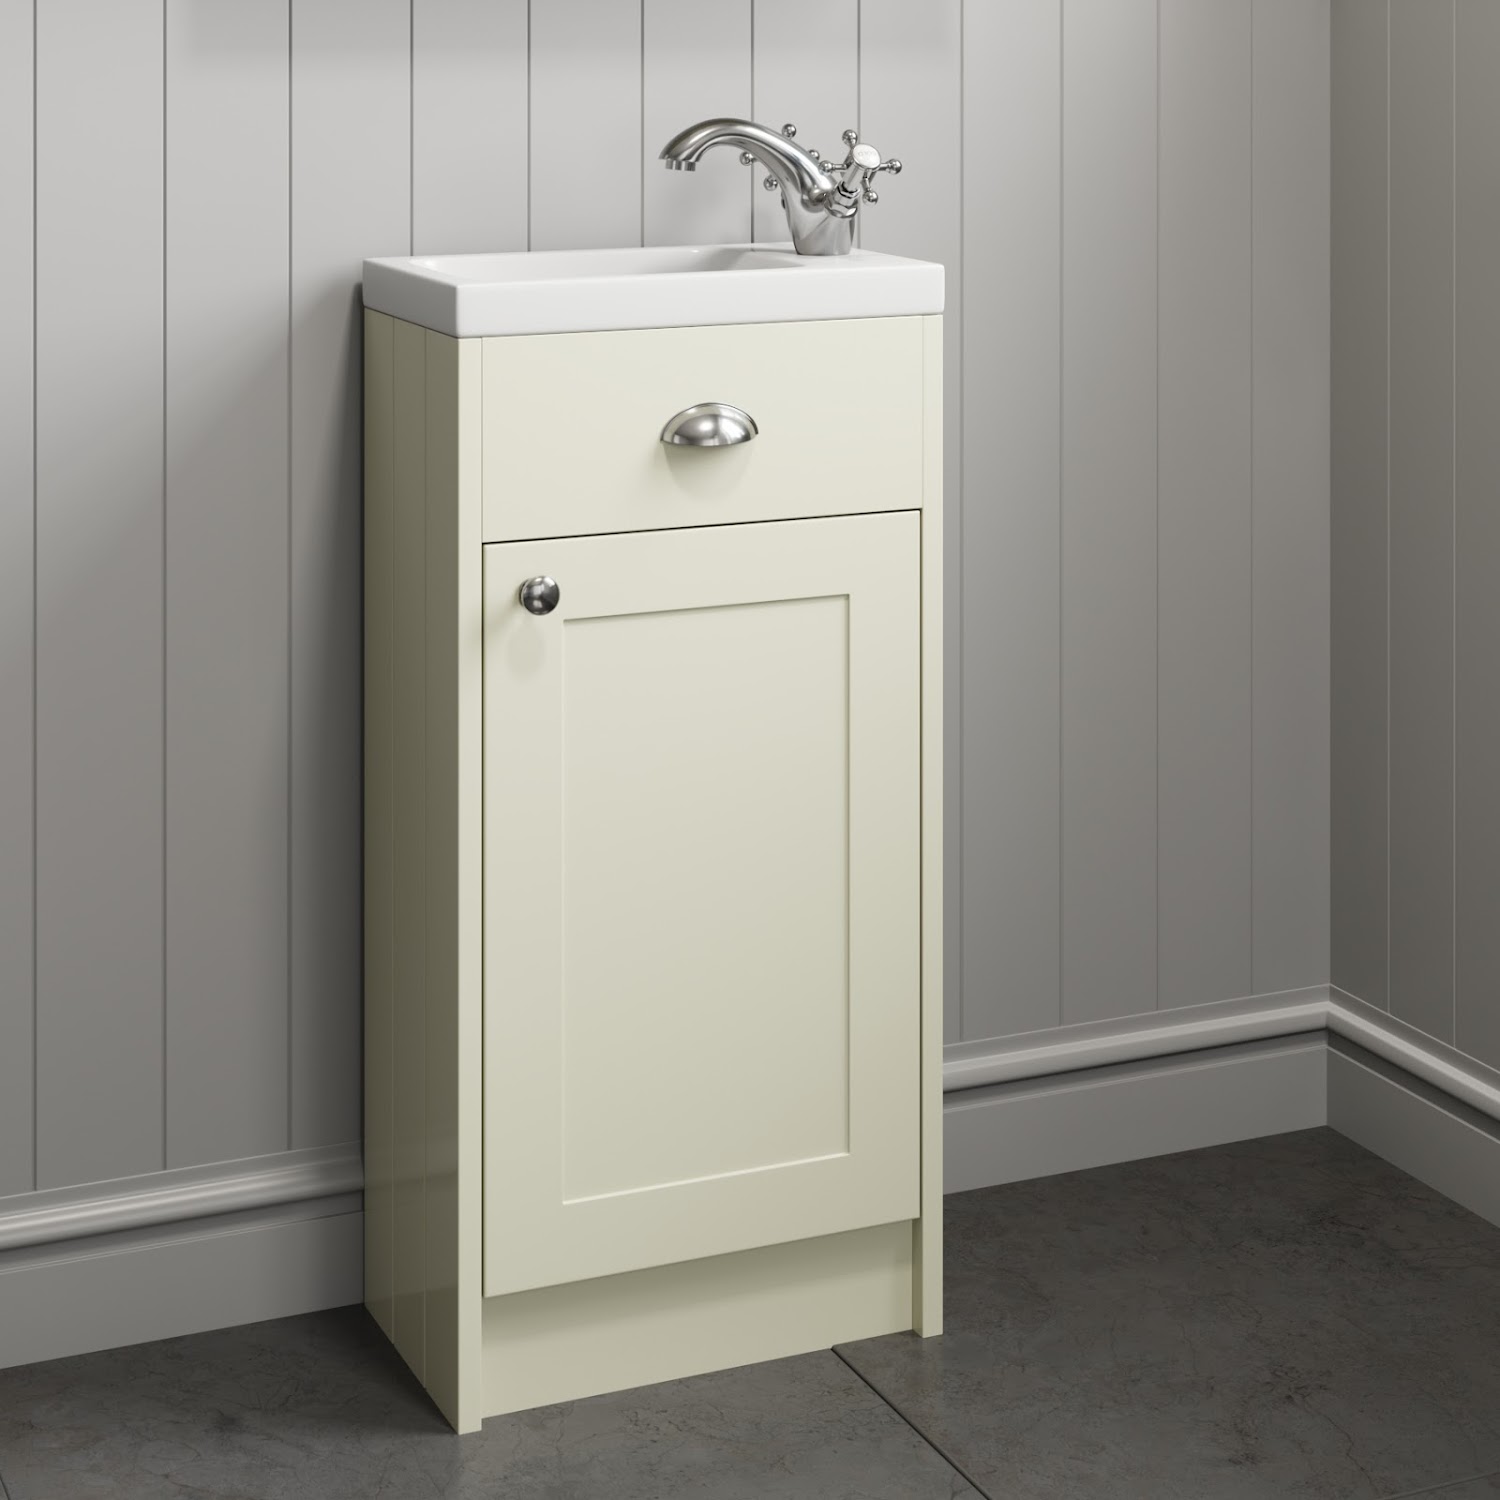 Traditional 400mm Bathroom Basin Sink Vanity Unit Storage Cabinet 1 ...